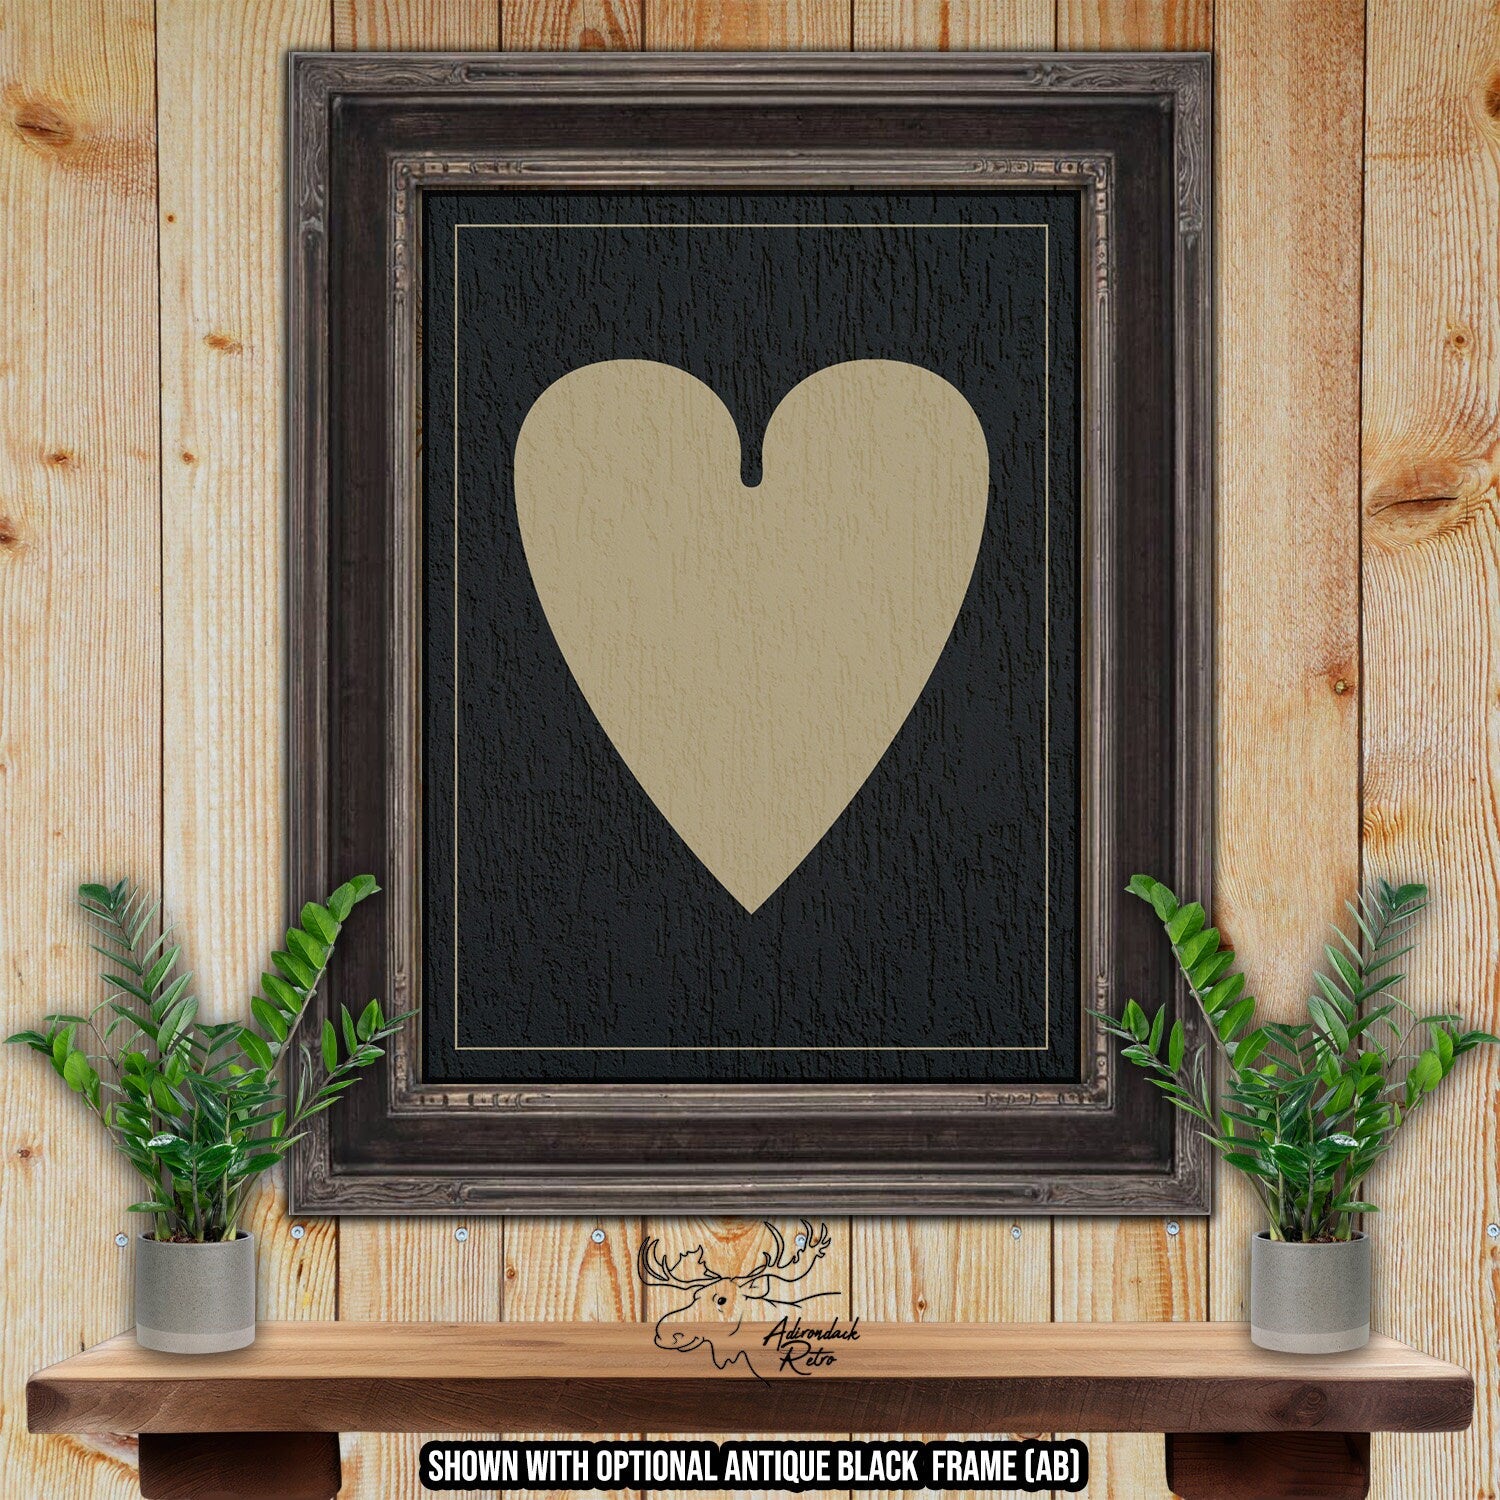 Hearts Playing Card Suit - Black & Tan Fine Art Print at Adirondack Reto